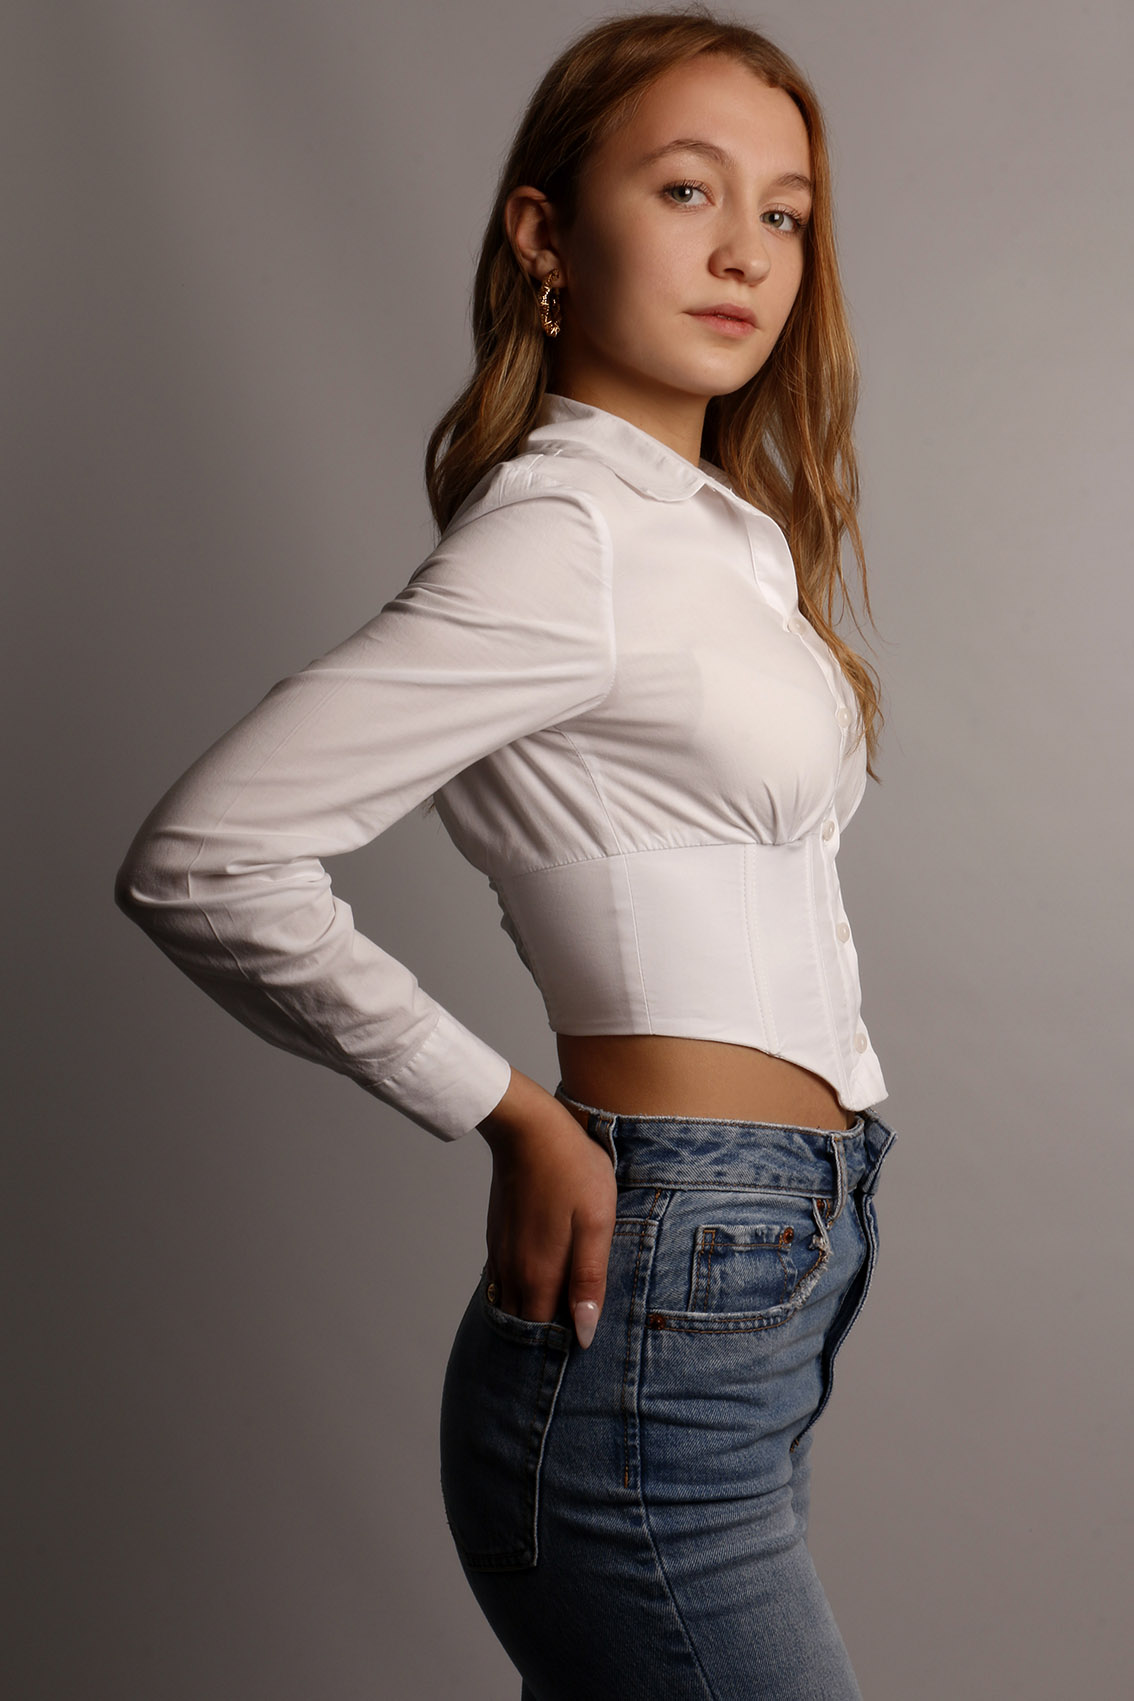 María del Mar Aradilla Acedo modelo femenino Broadway Model